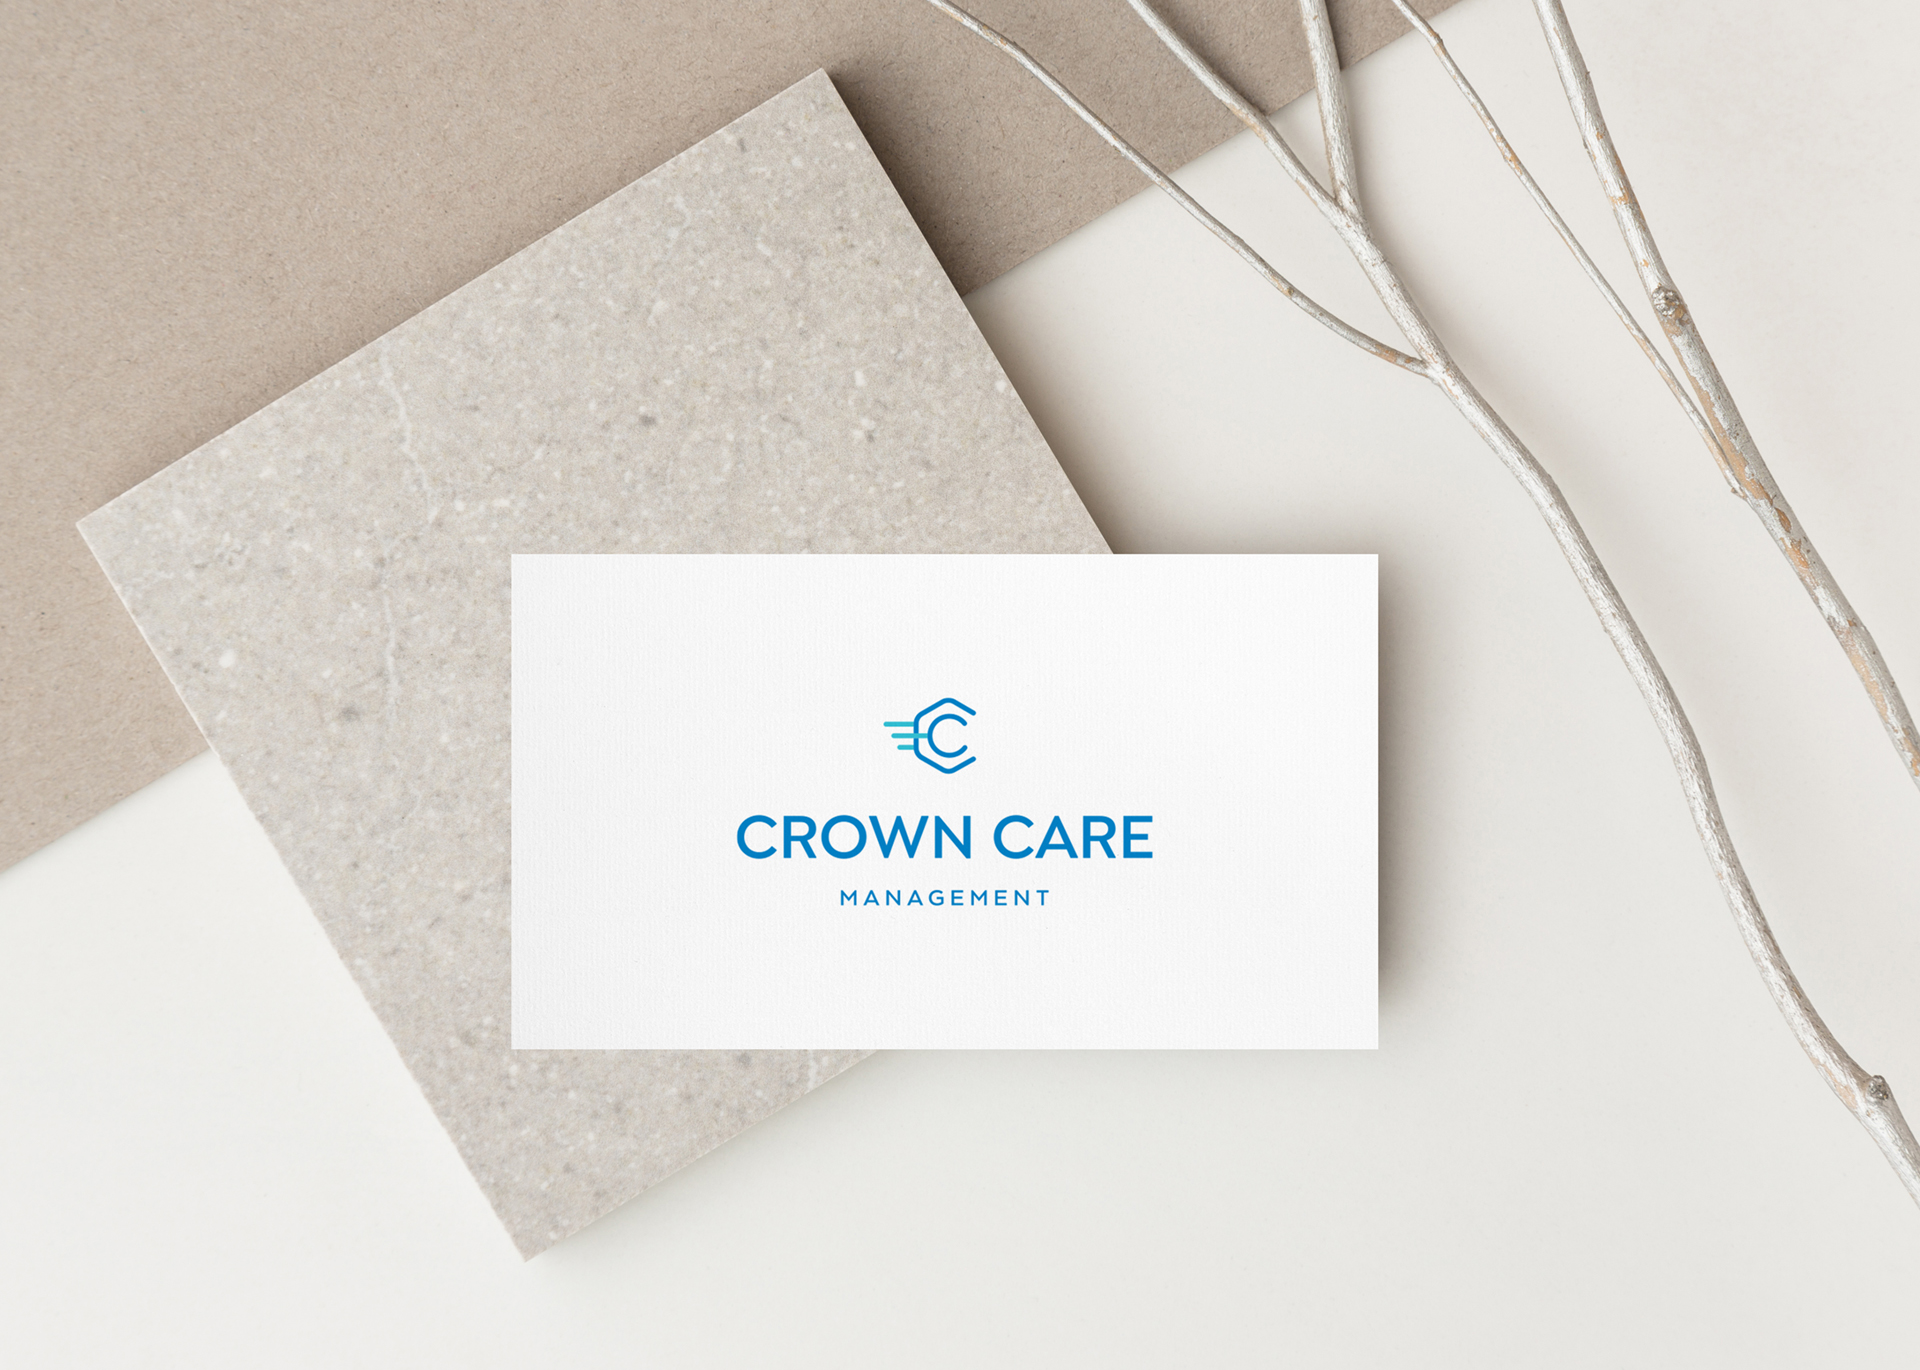 Crown Care Management